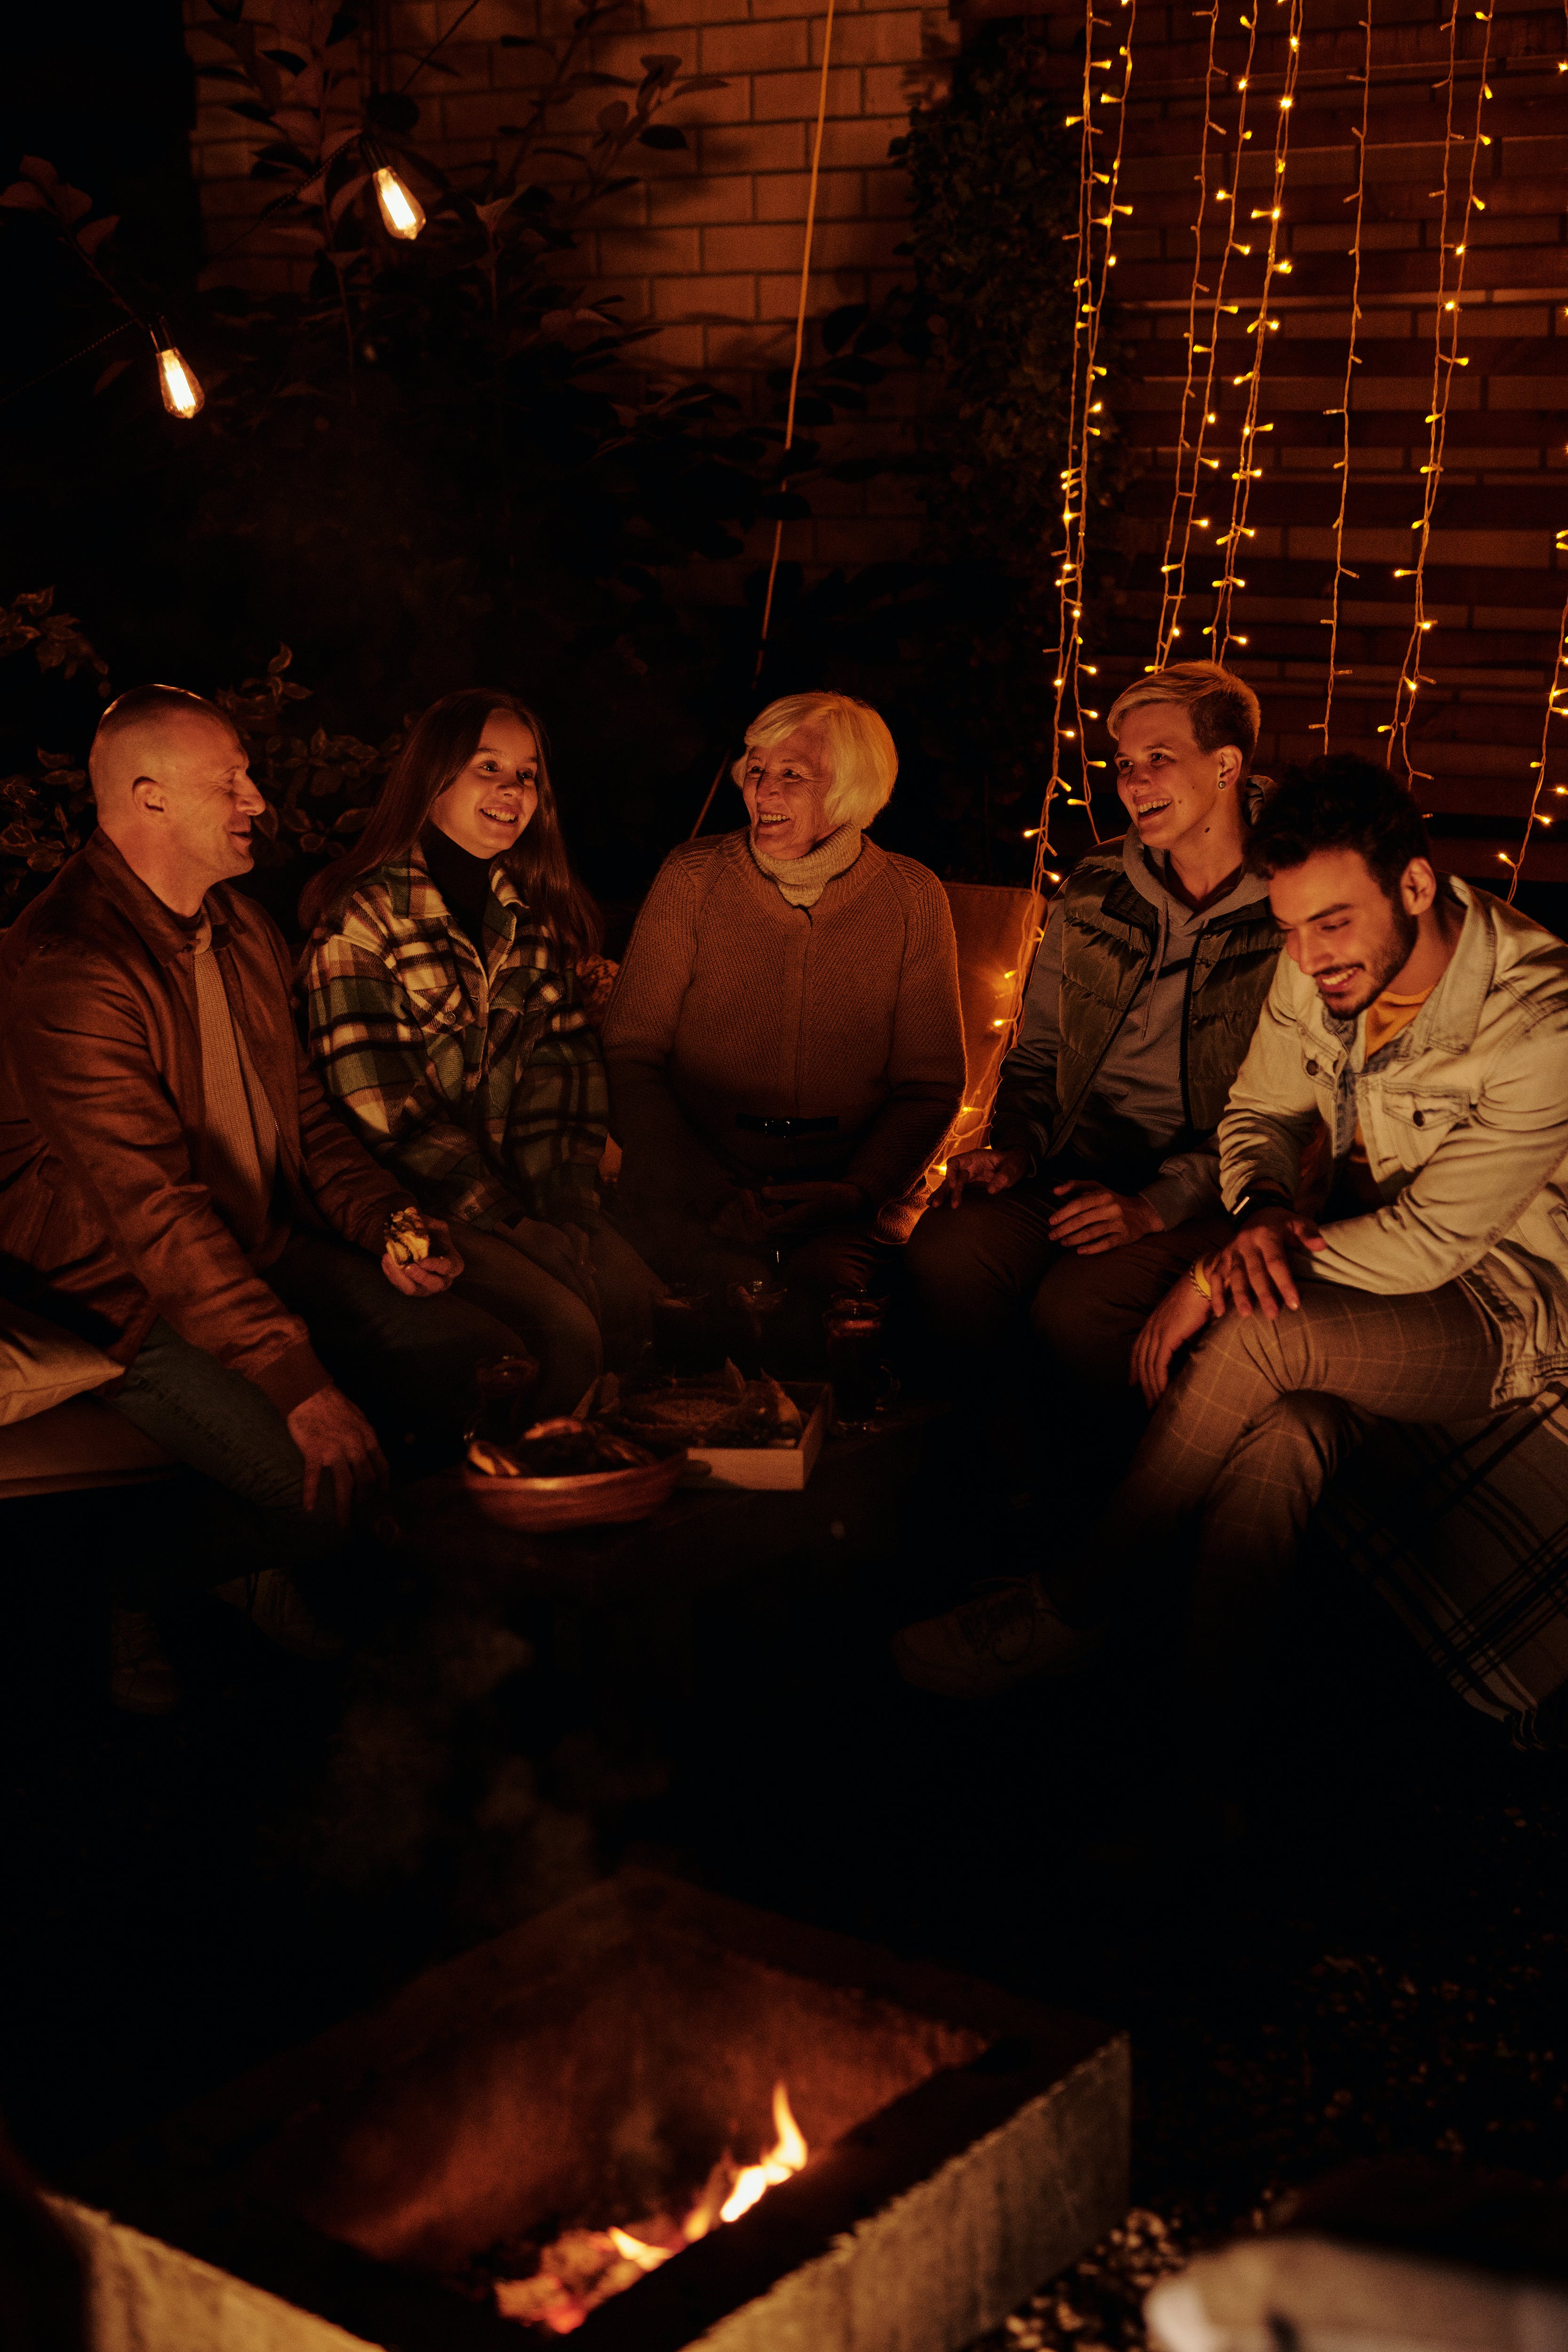 Family gathering around bonfire in dark backyard